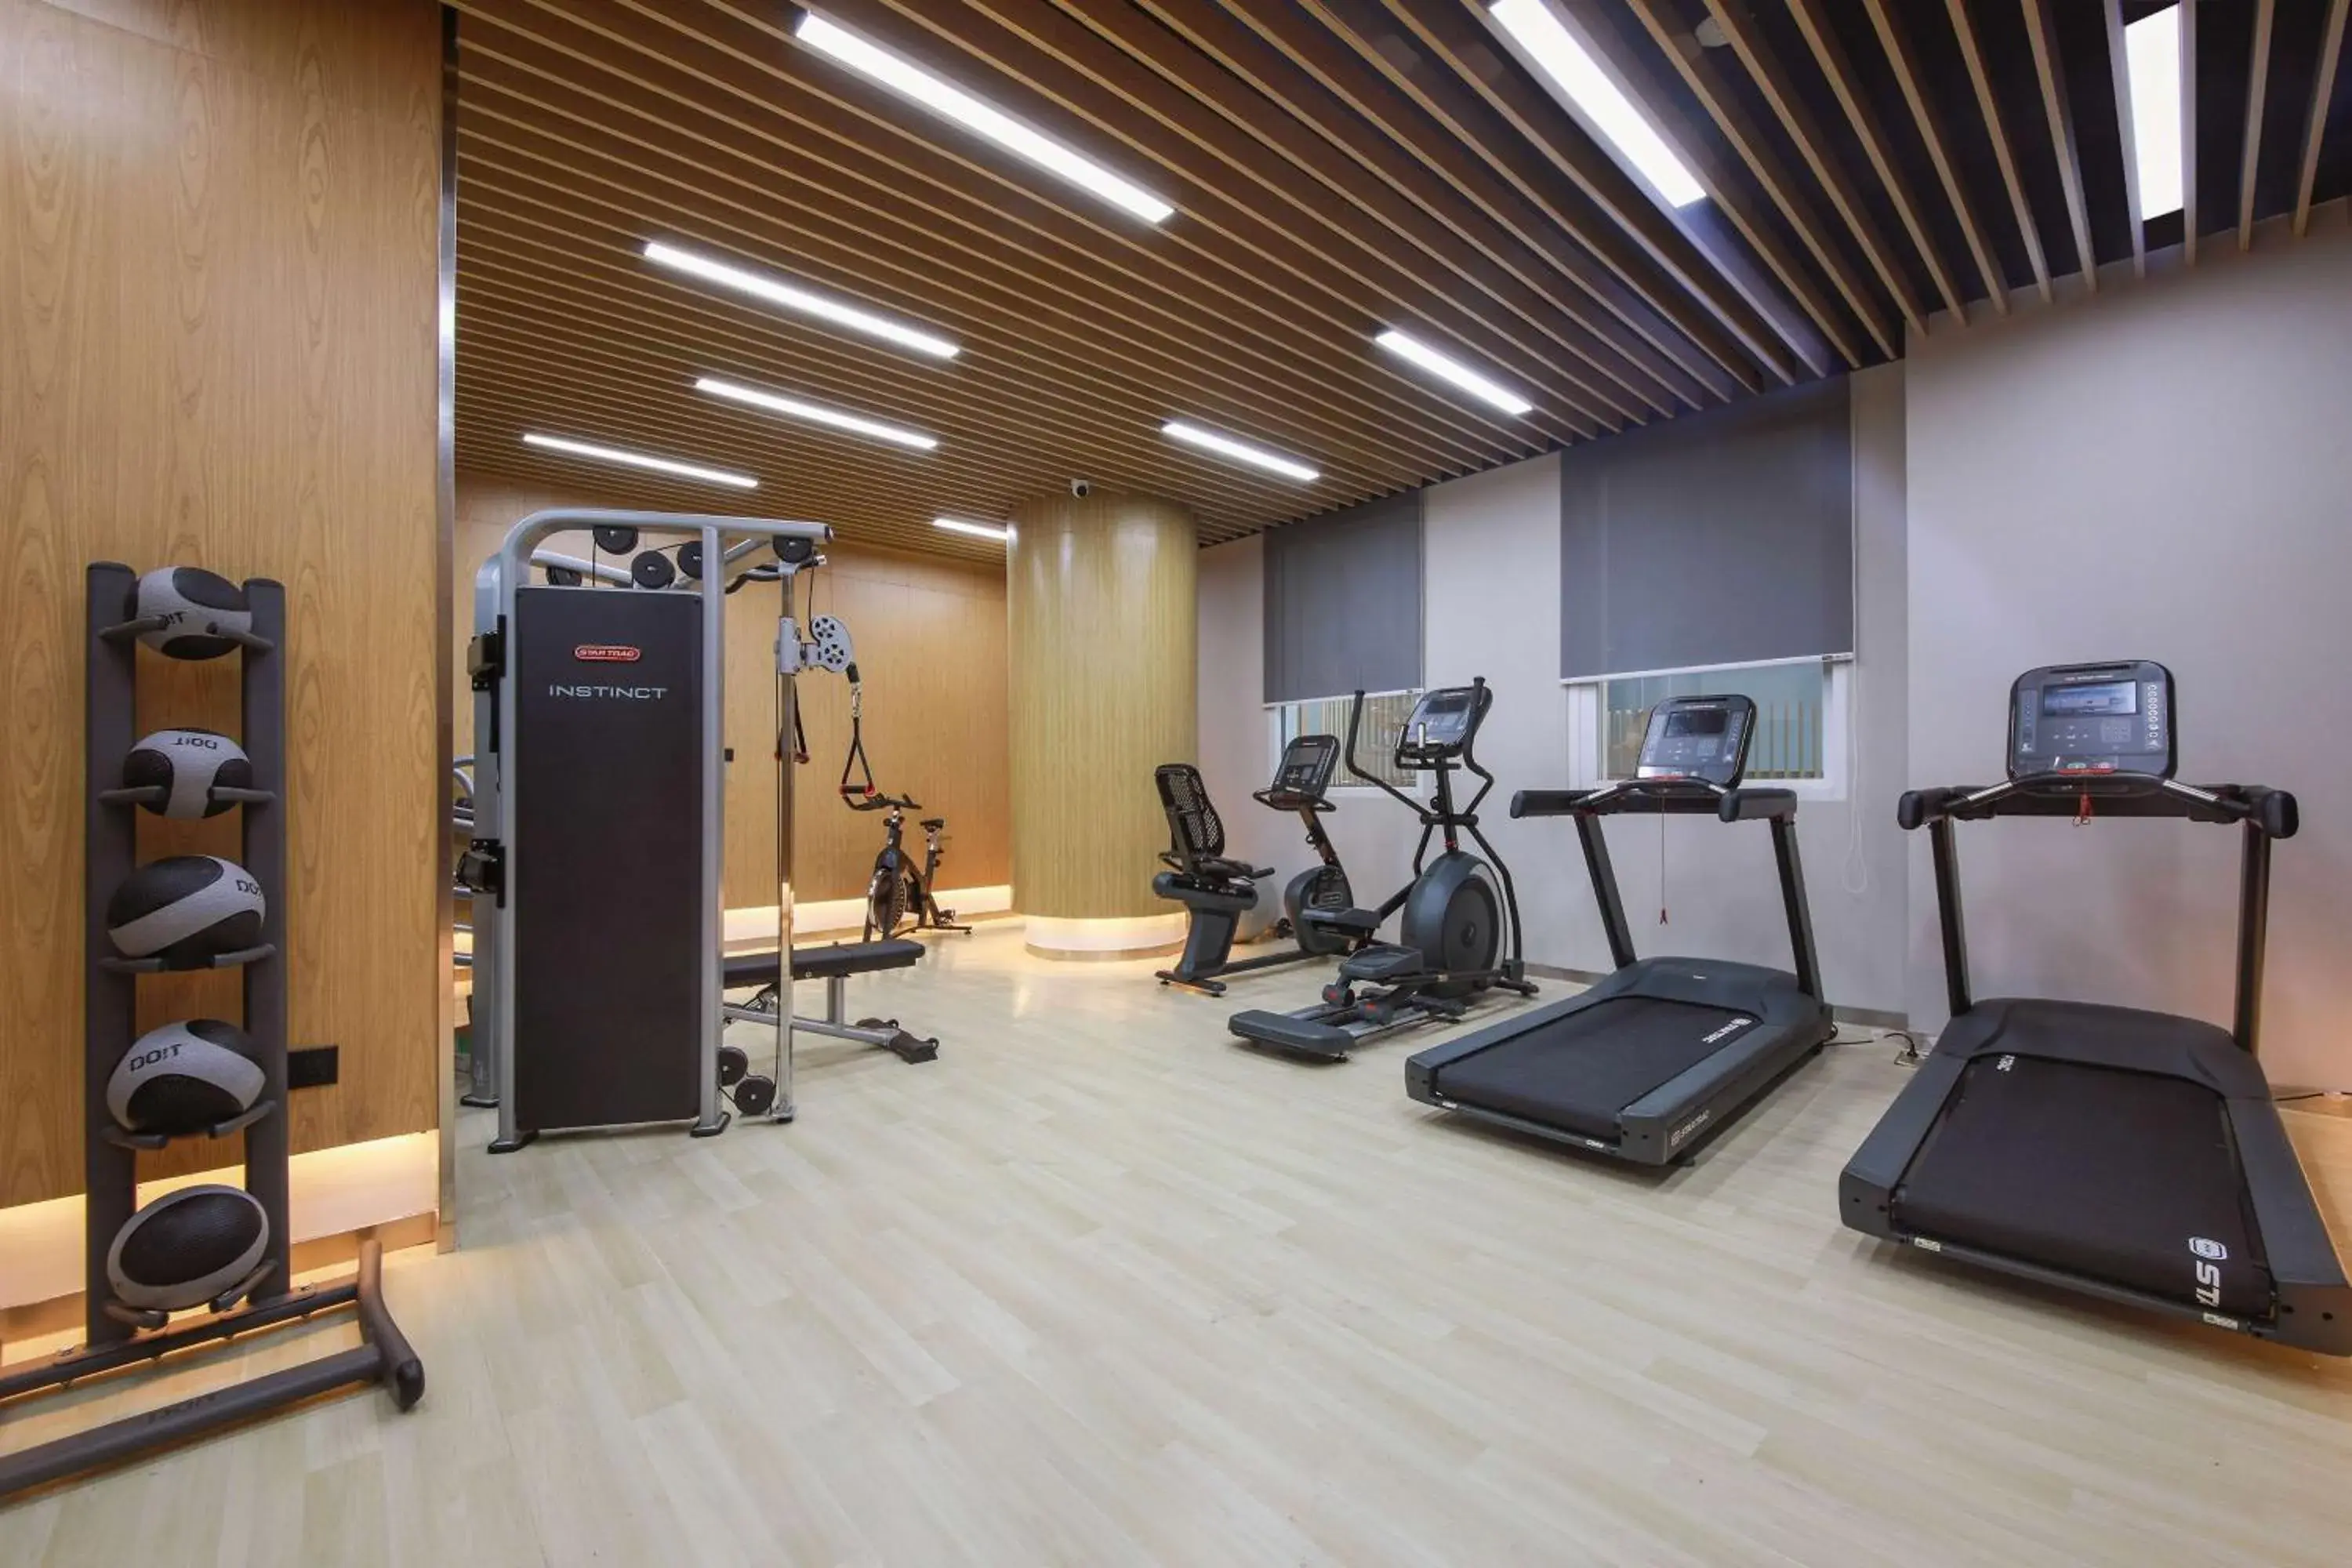 Fitness centre/facilities, Fitness Center/Facilities in Hilton Garden Inn Nantong Xinghu